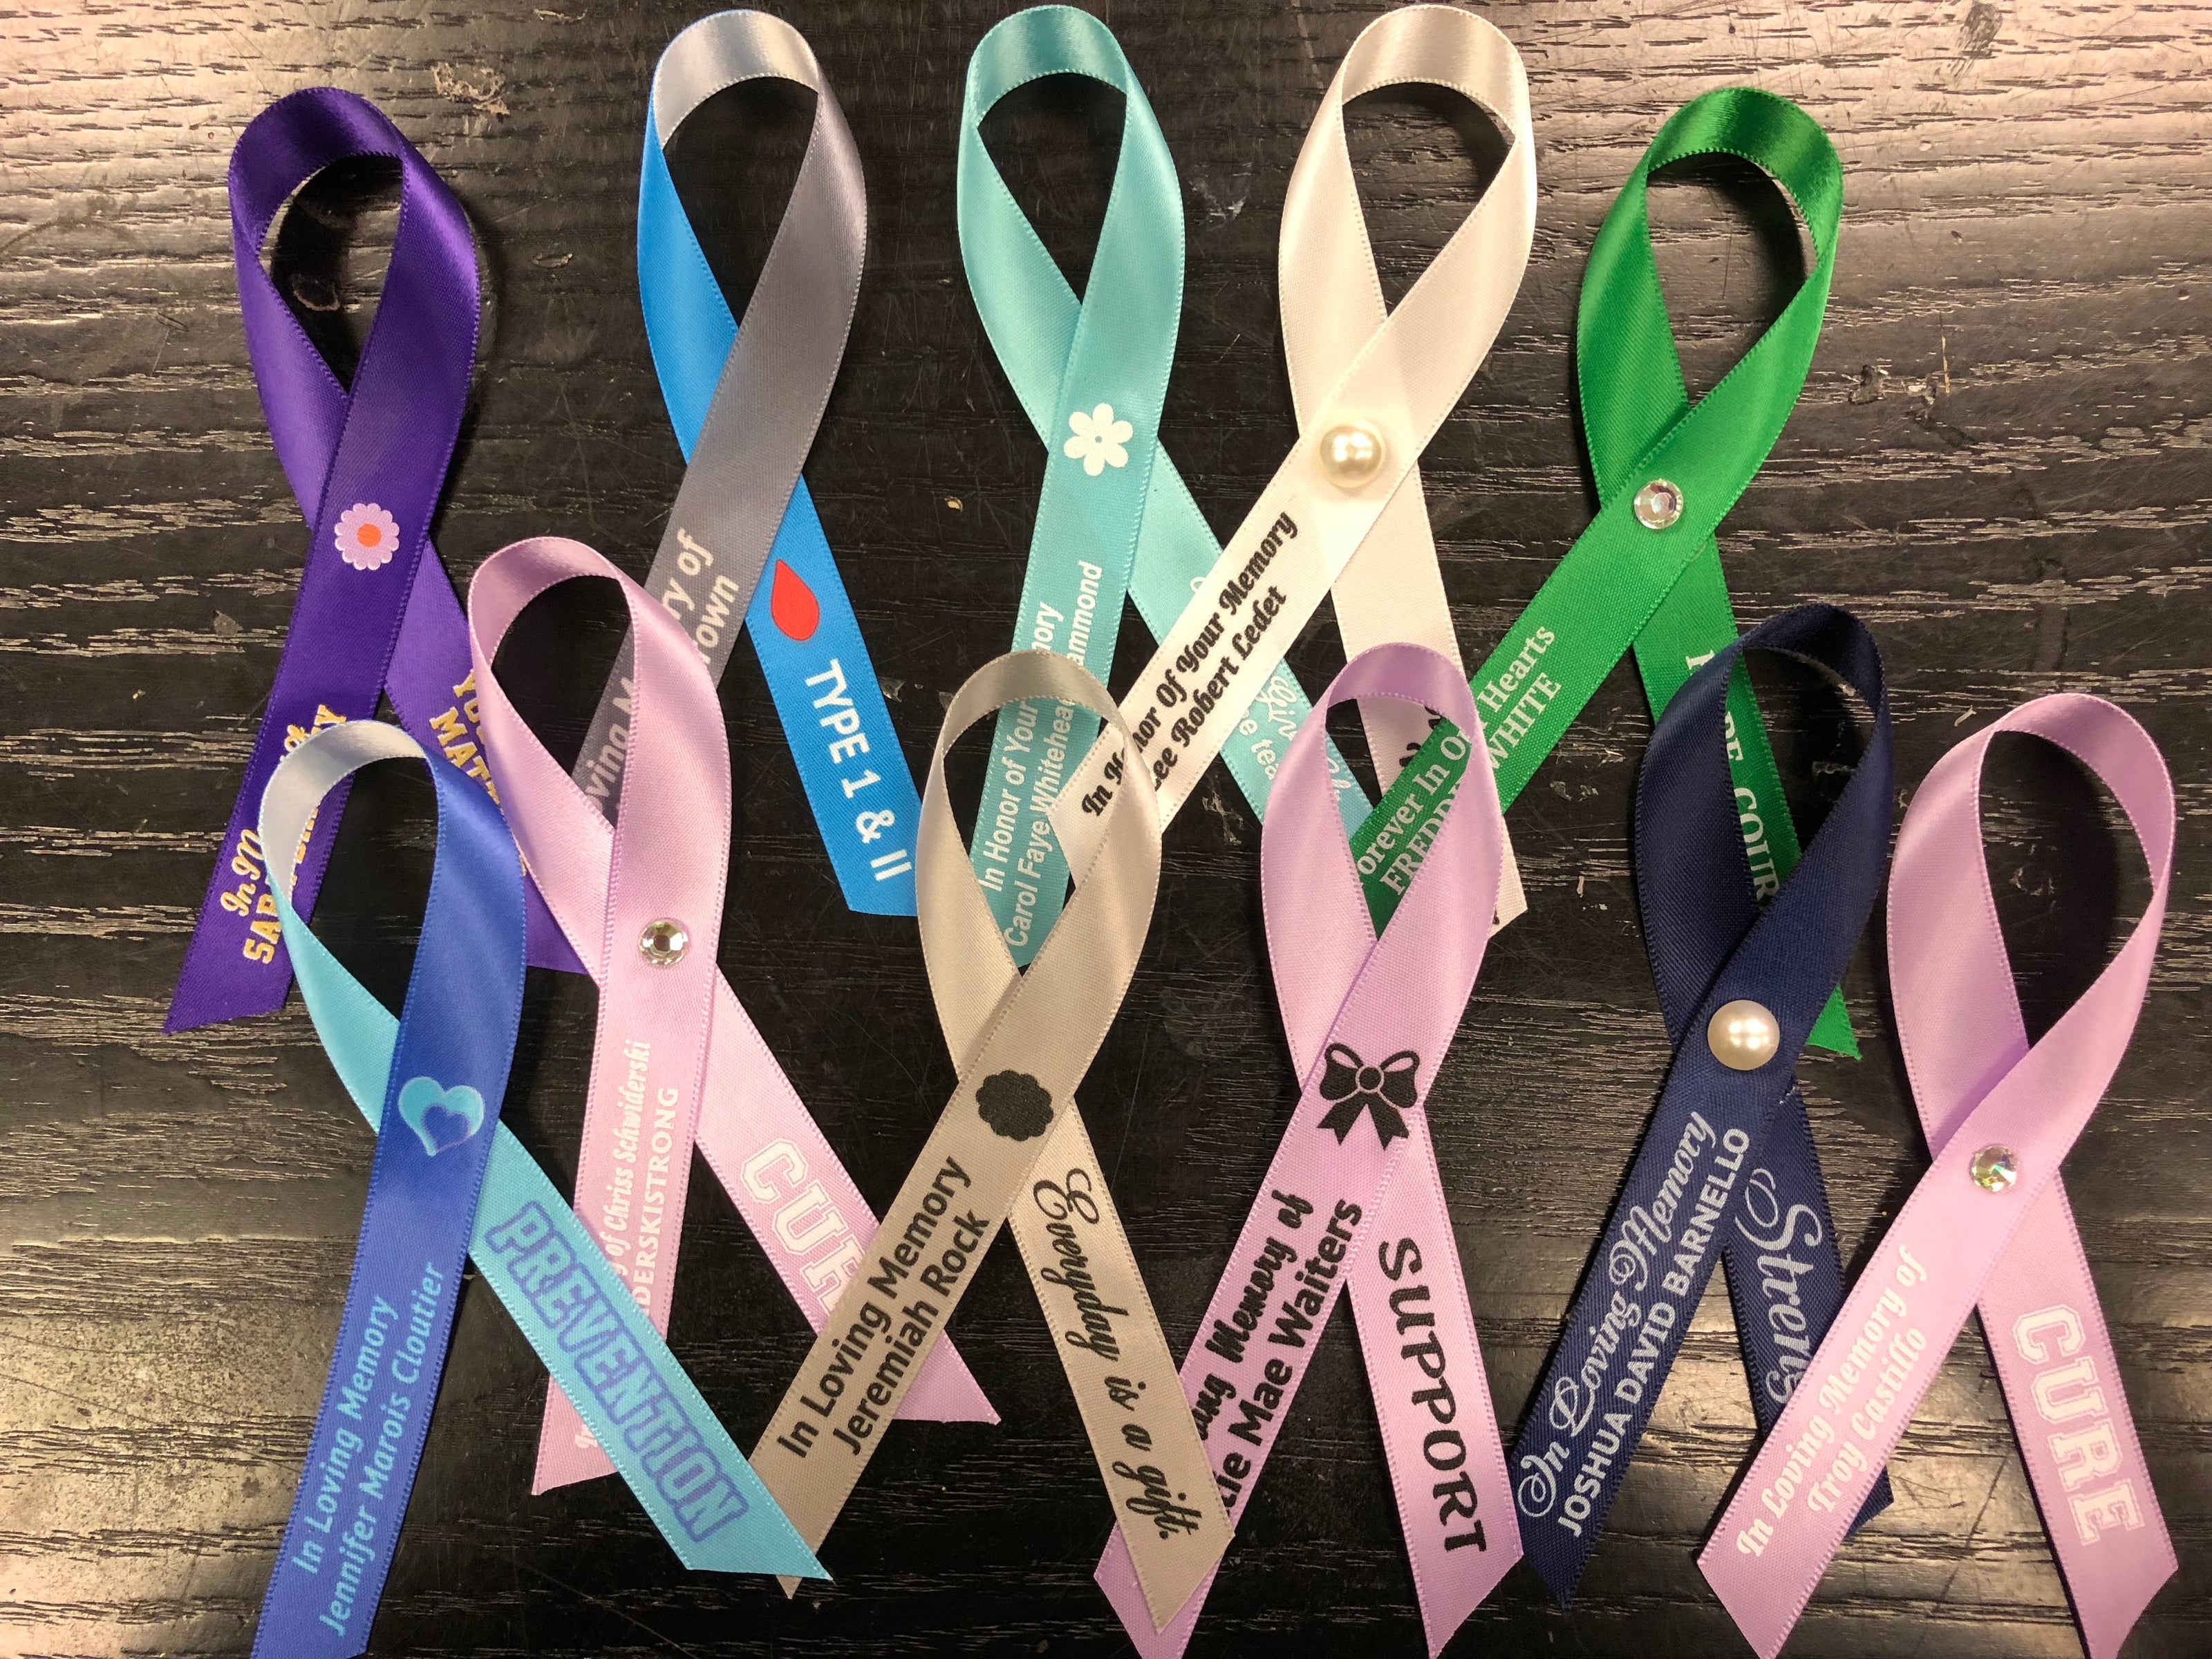 Green Cancer Ribbon, Awareness Ribbons (No Personalization) - Pack of 10 -  Celebrate Prints